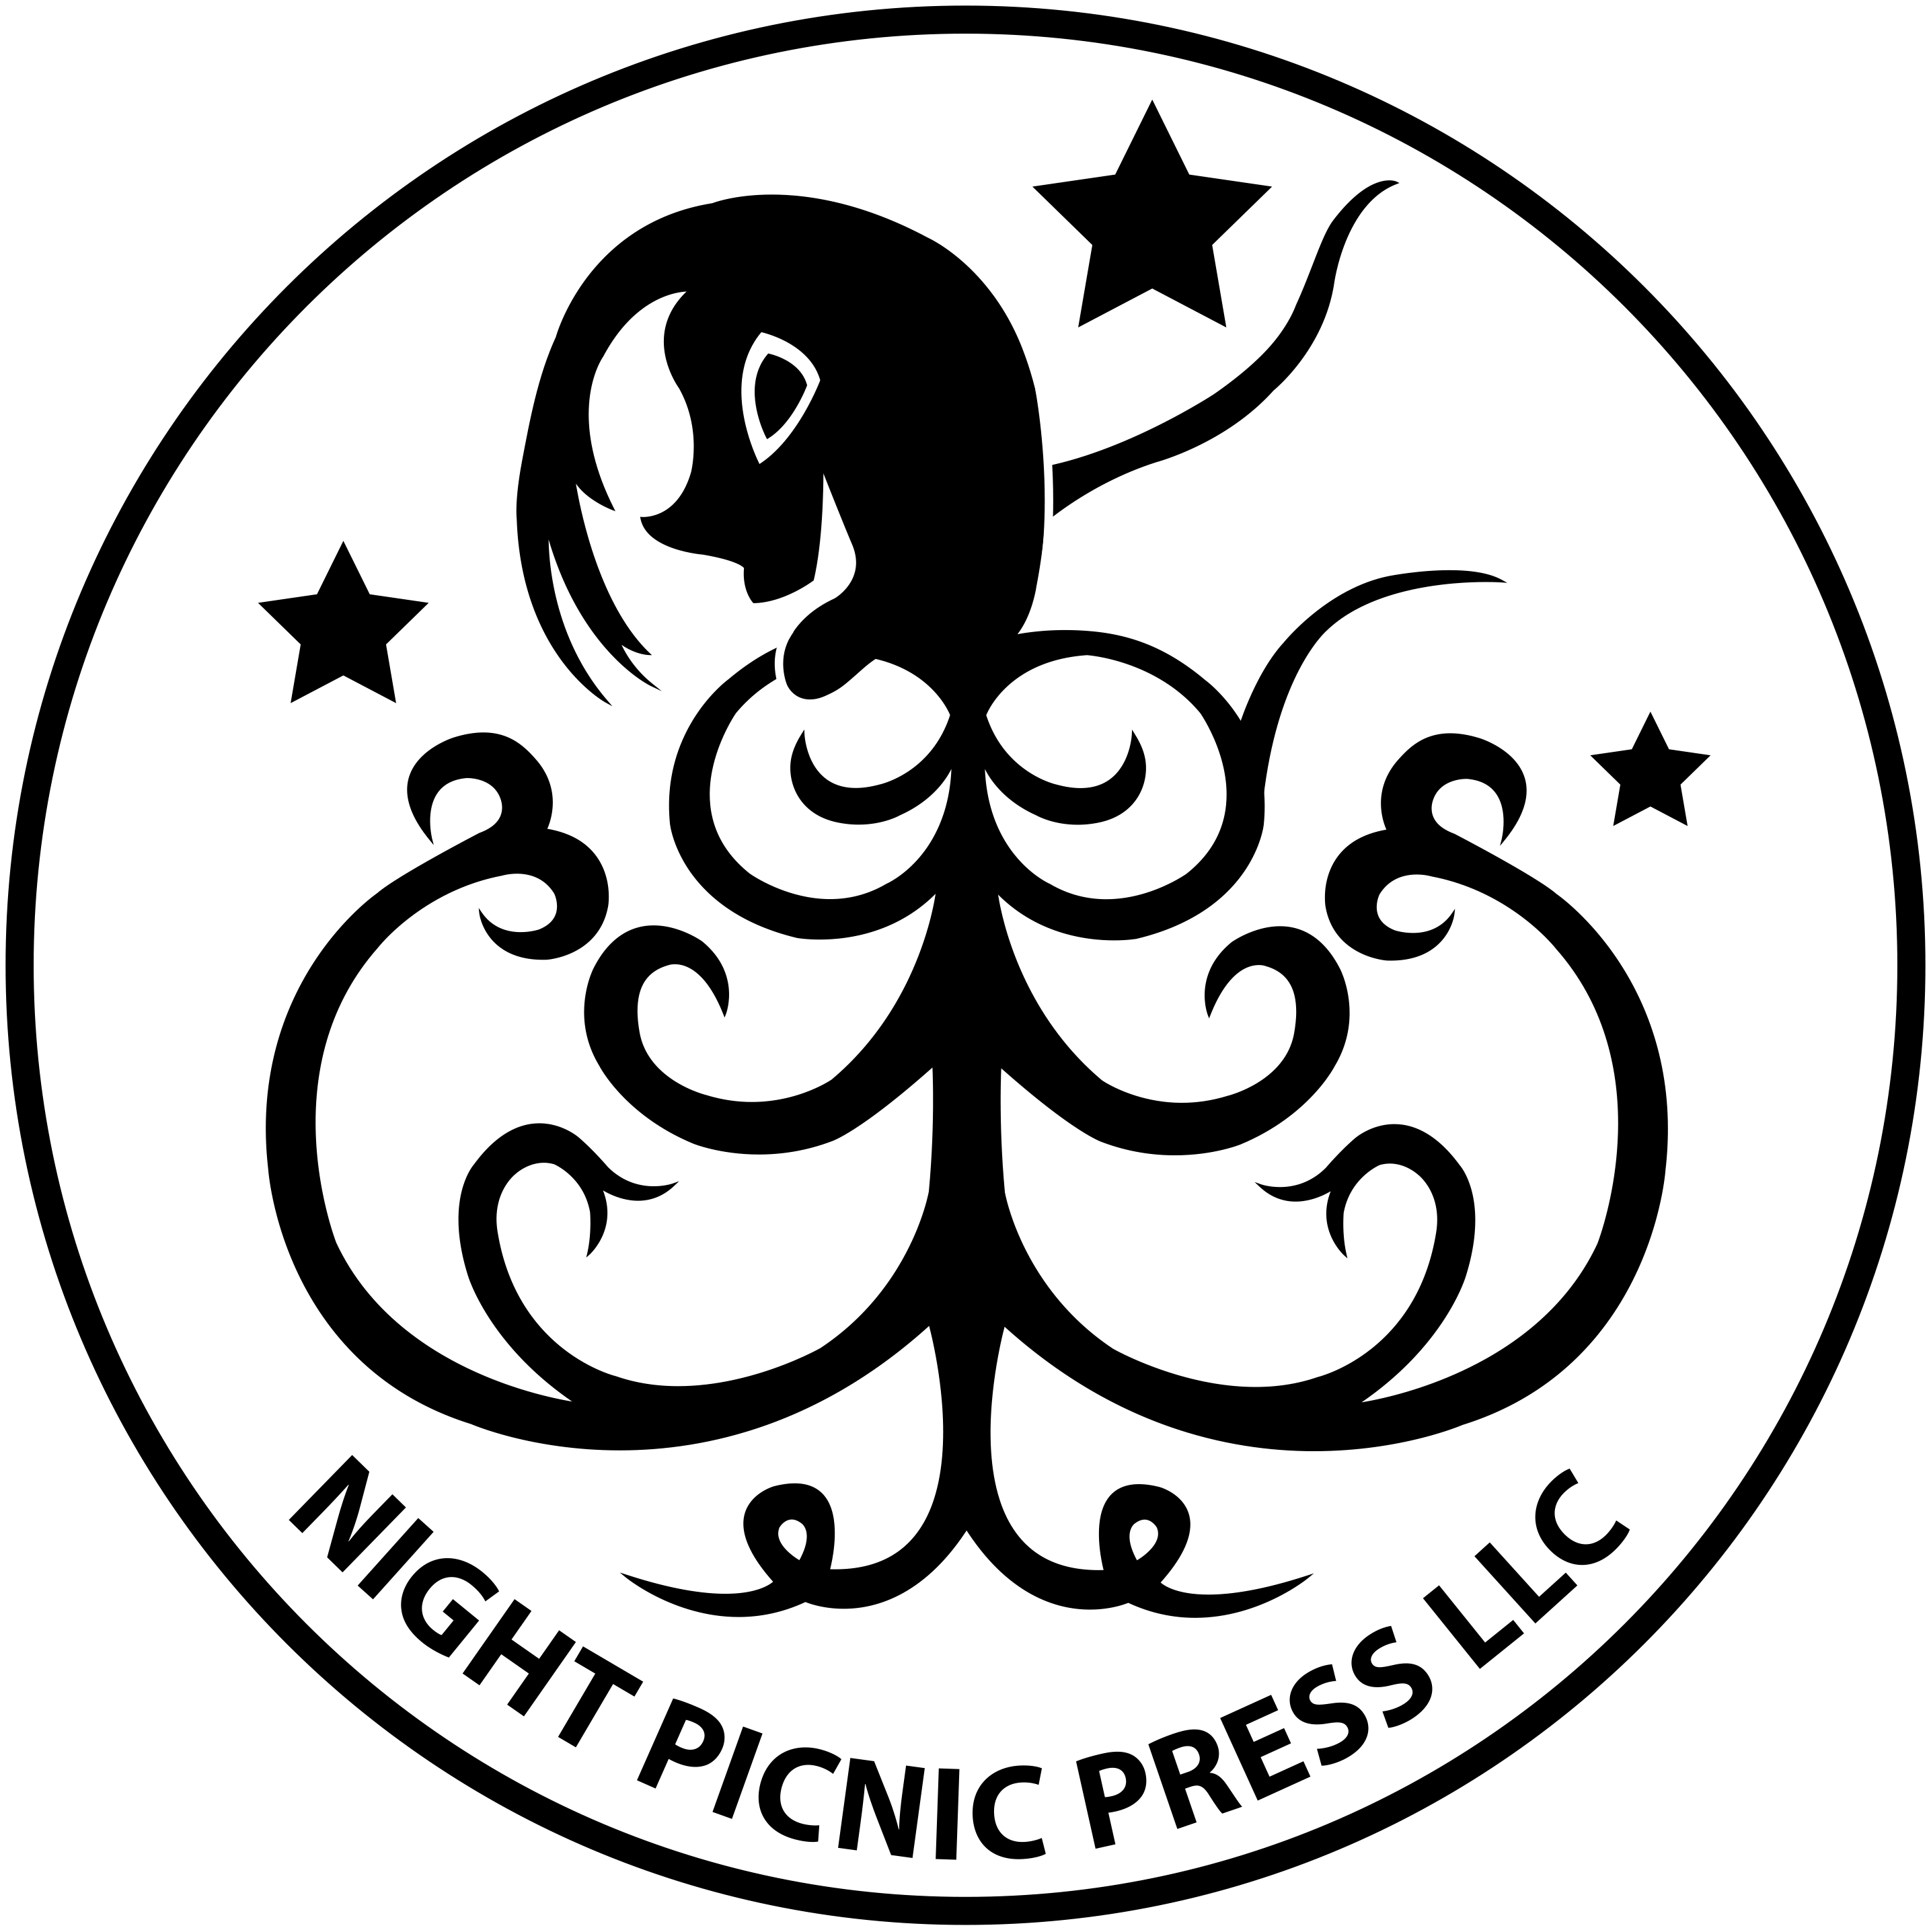 Night Picnic Press LLC